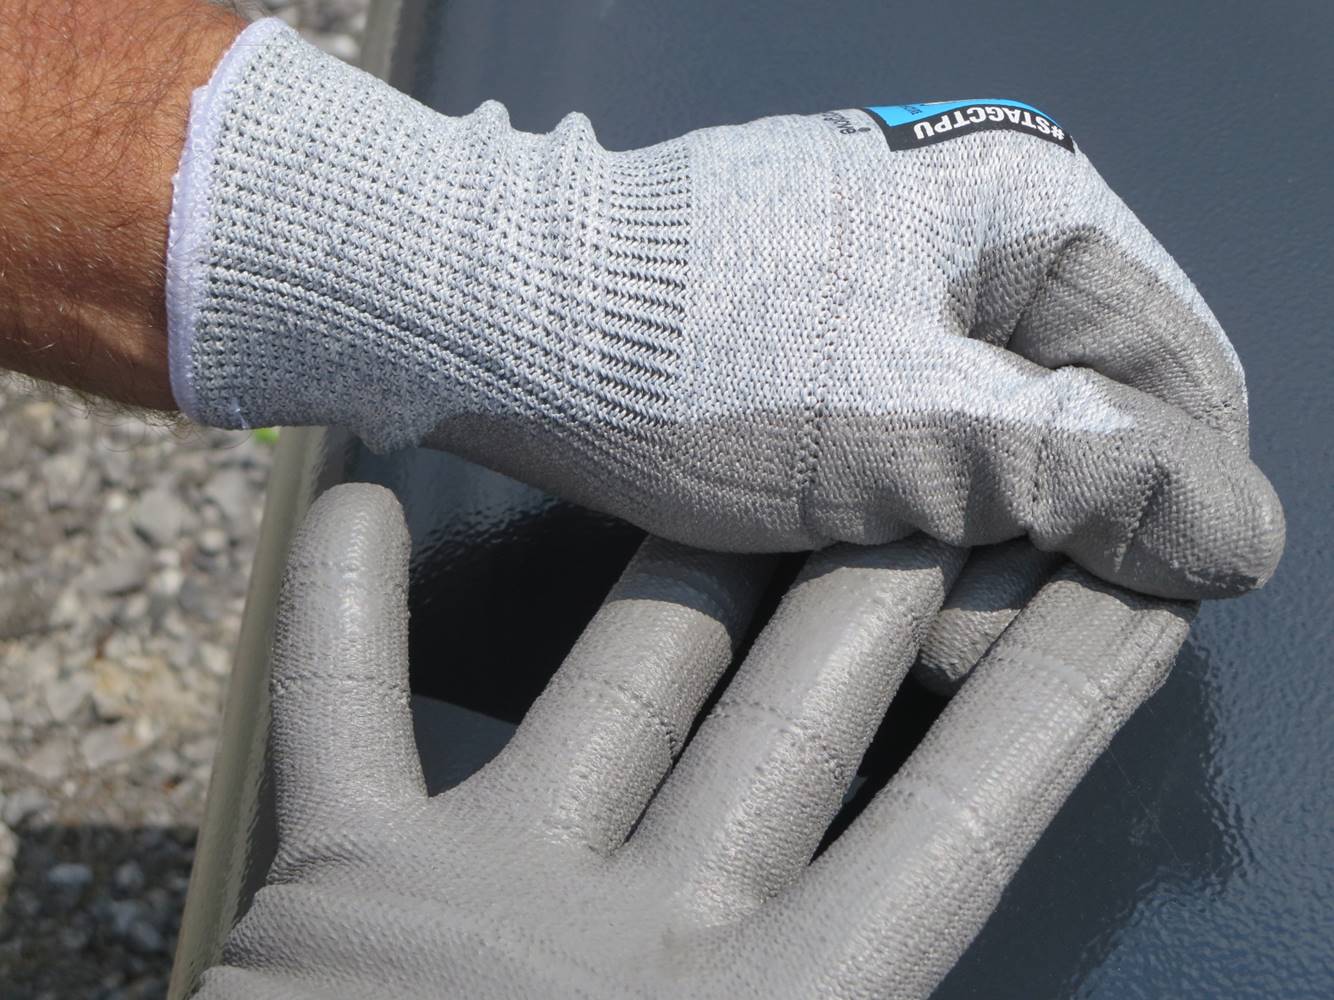 Superior Glove STAGPNVPI0 Cut-Resistant Gloves, Size 10, PR, Cut 5